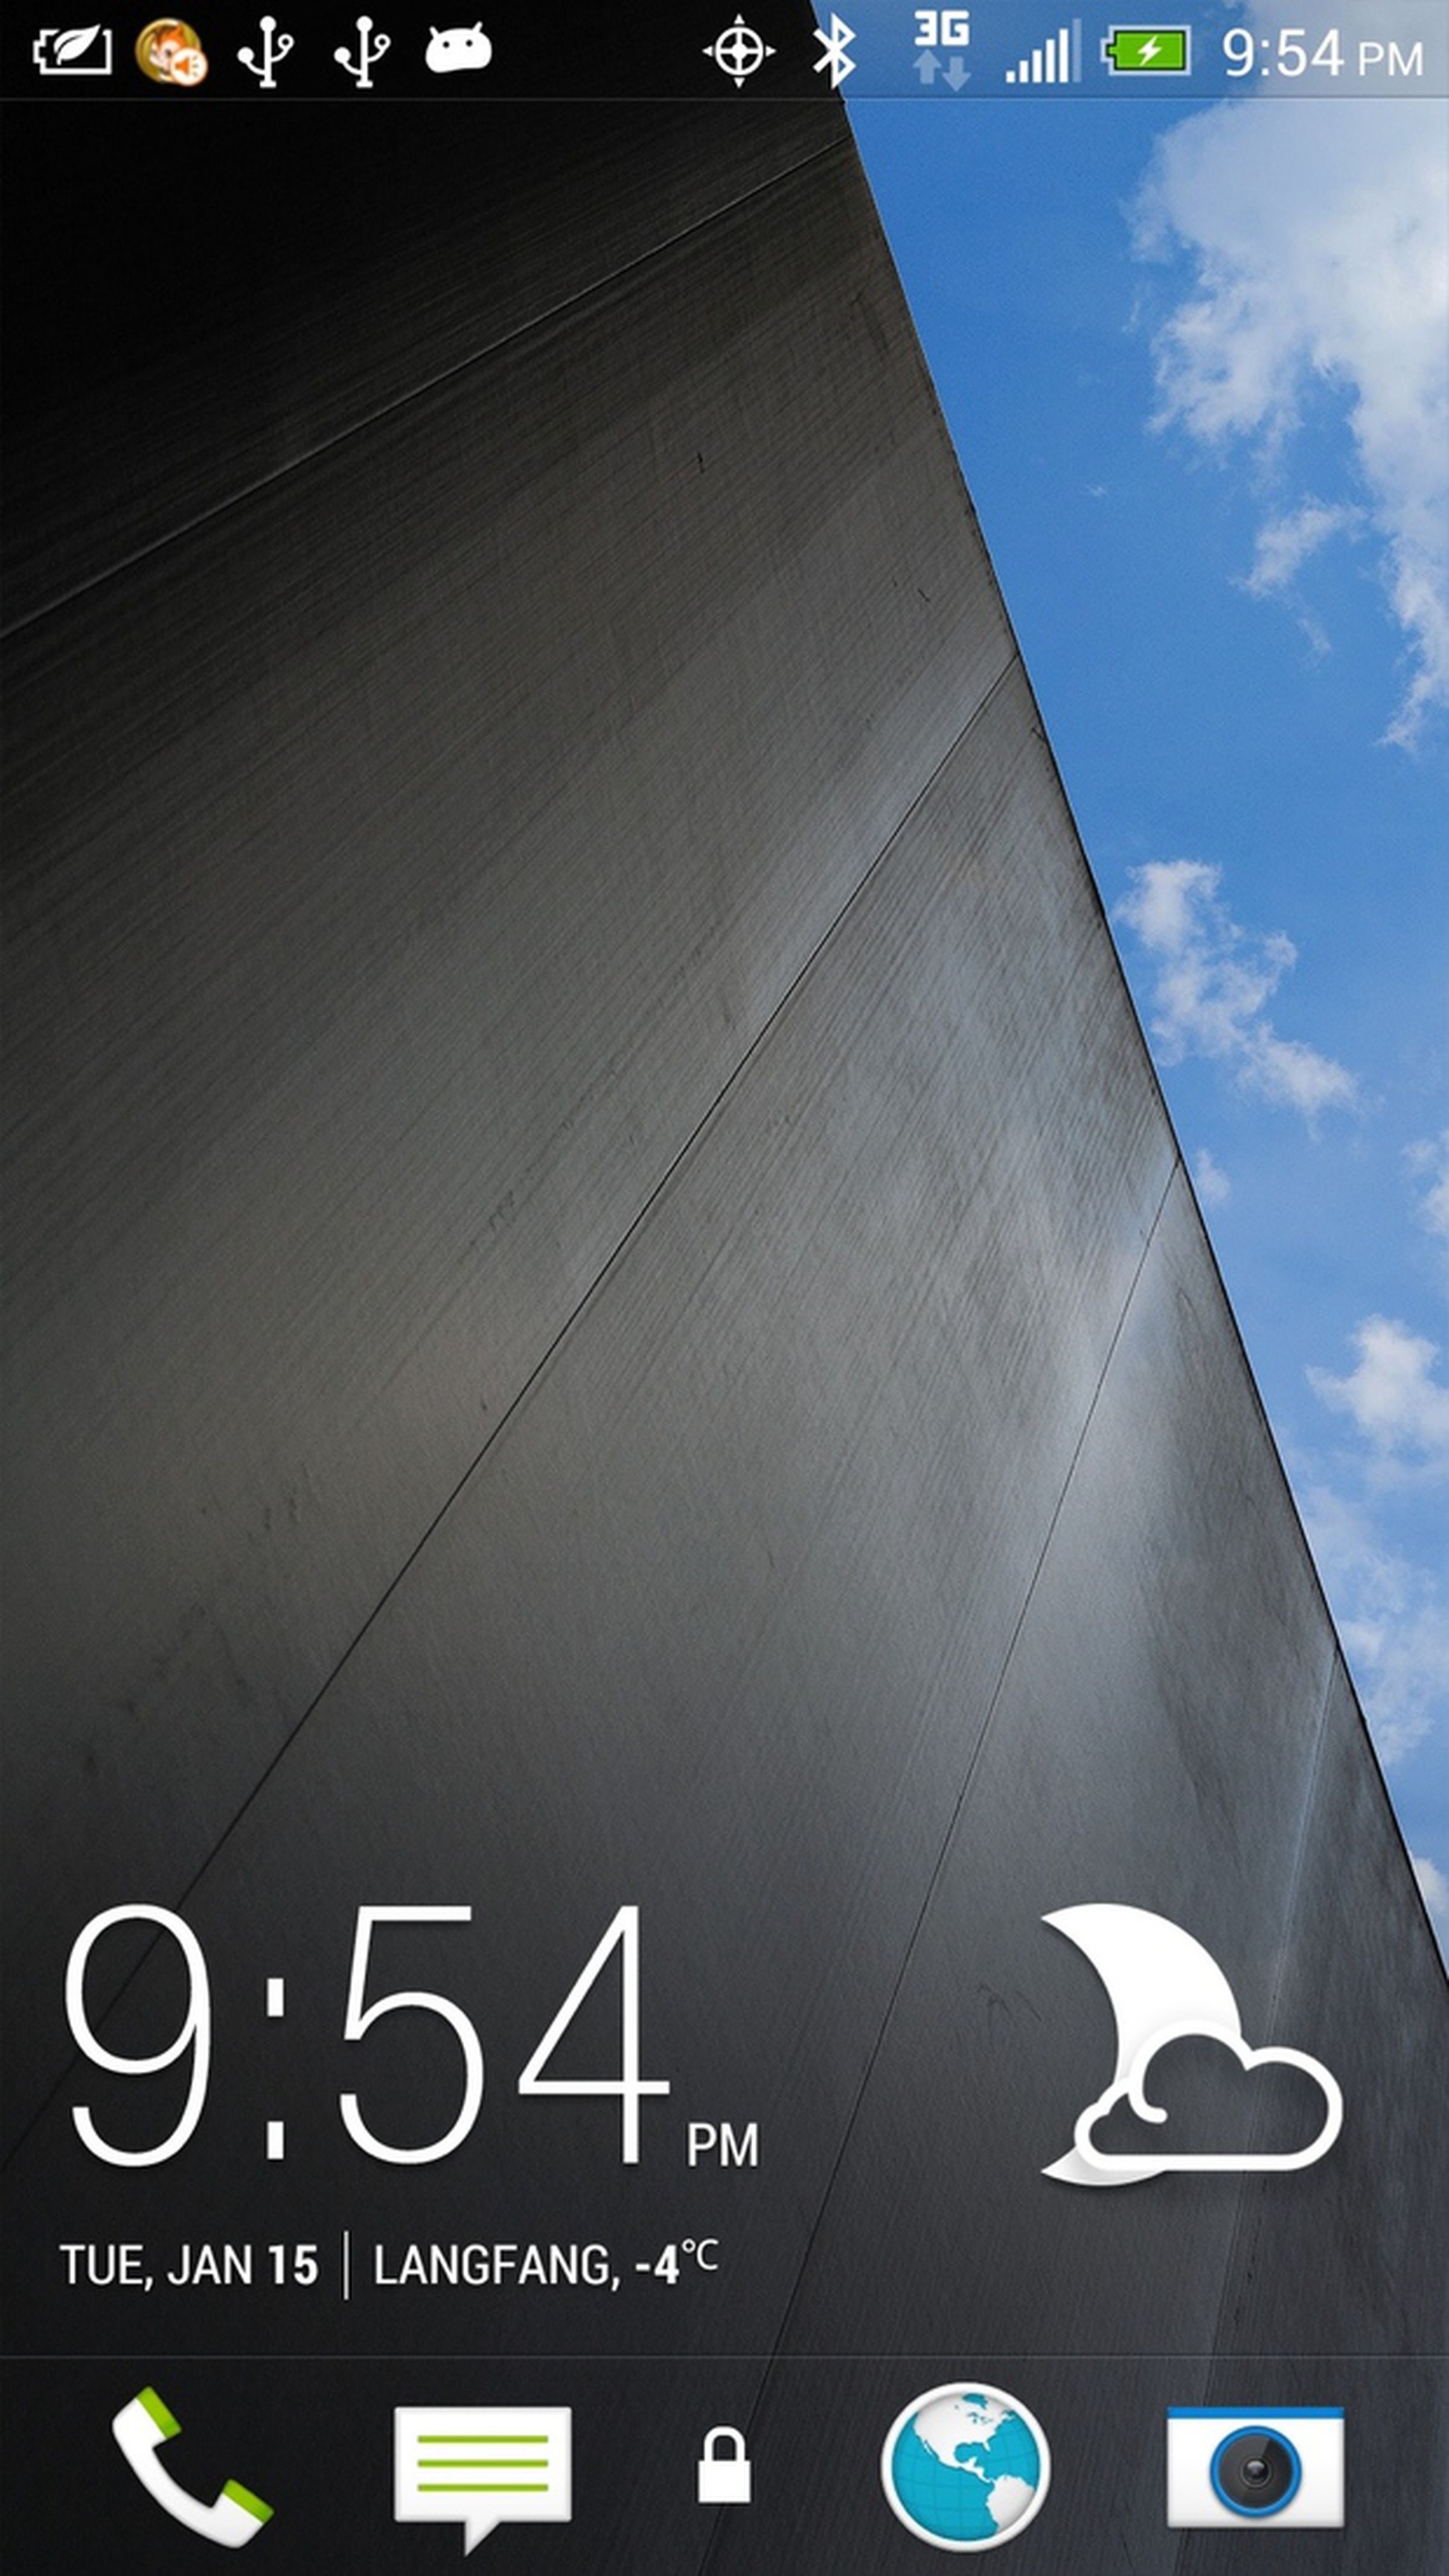 HTC Sense 5.0 screenshots